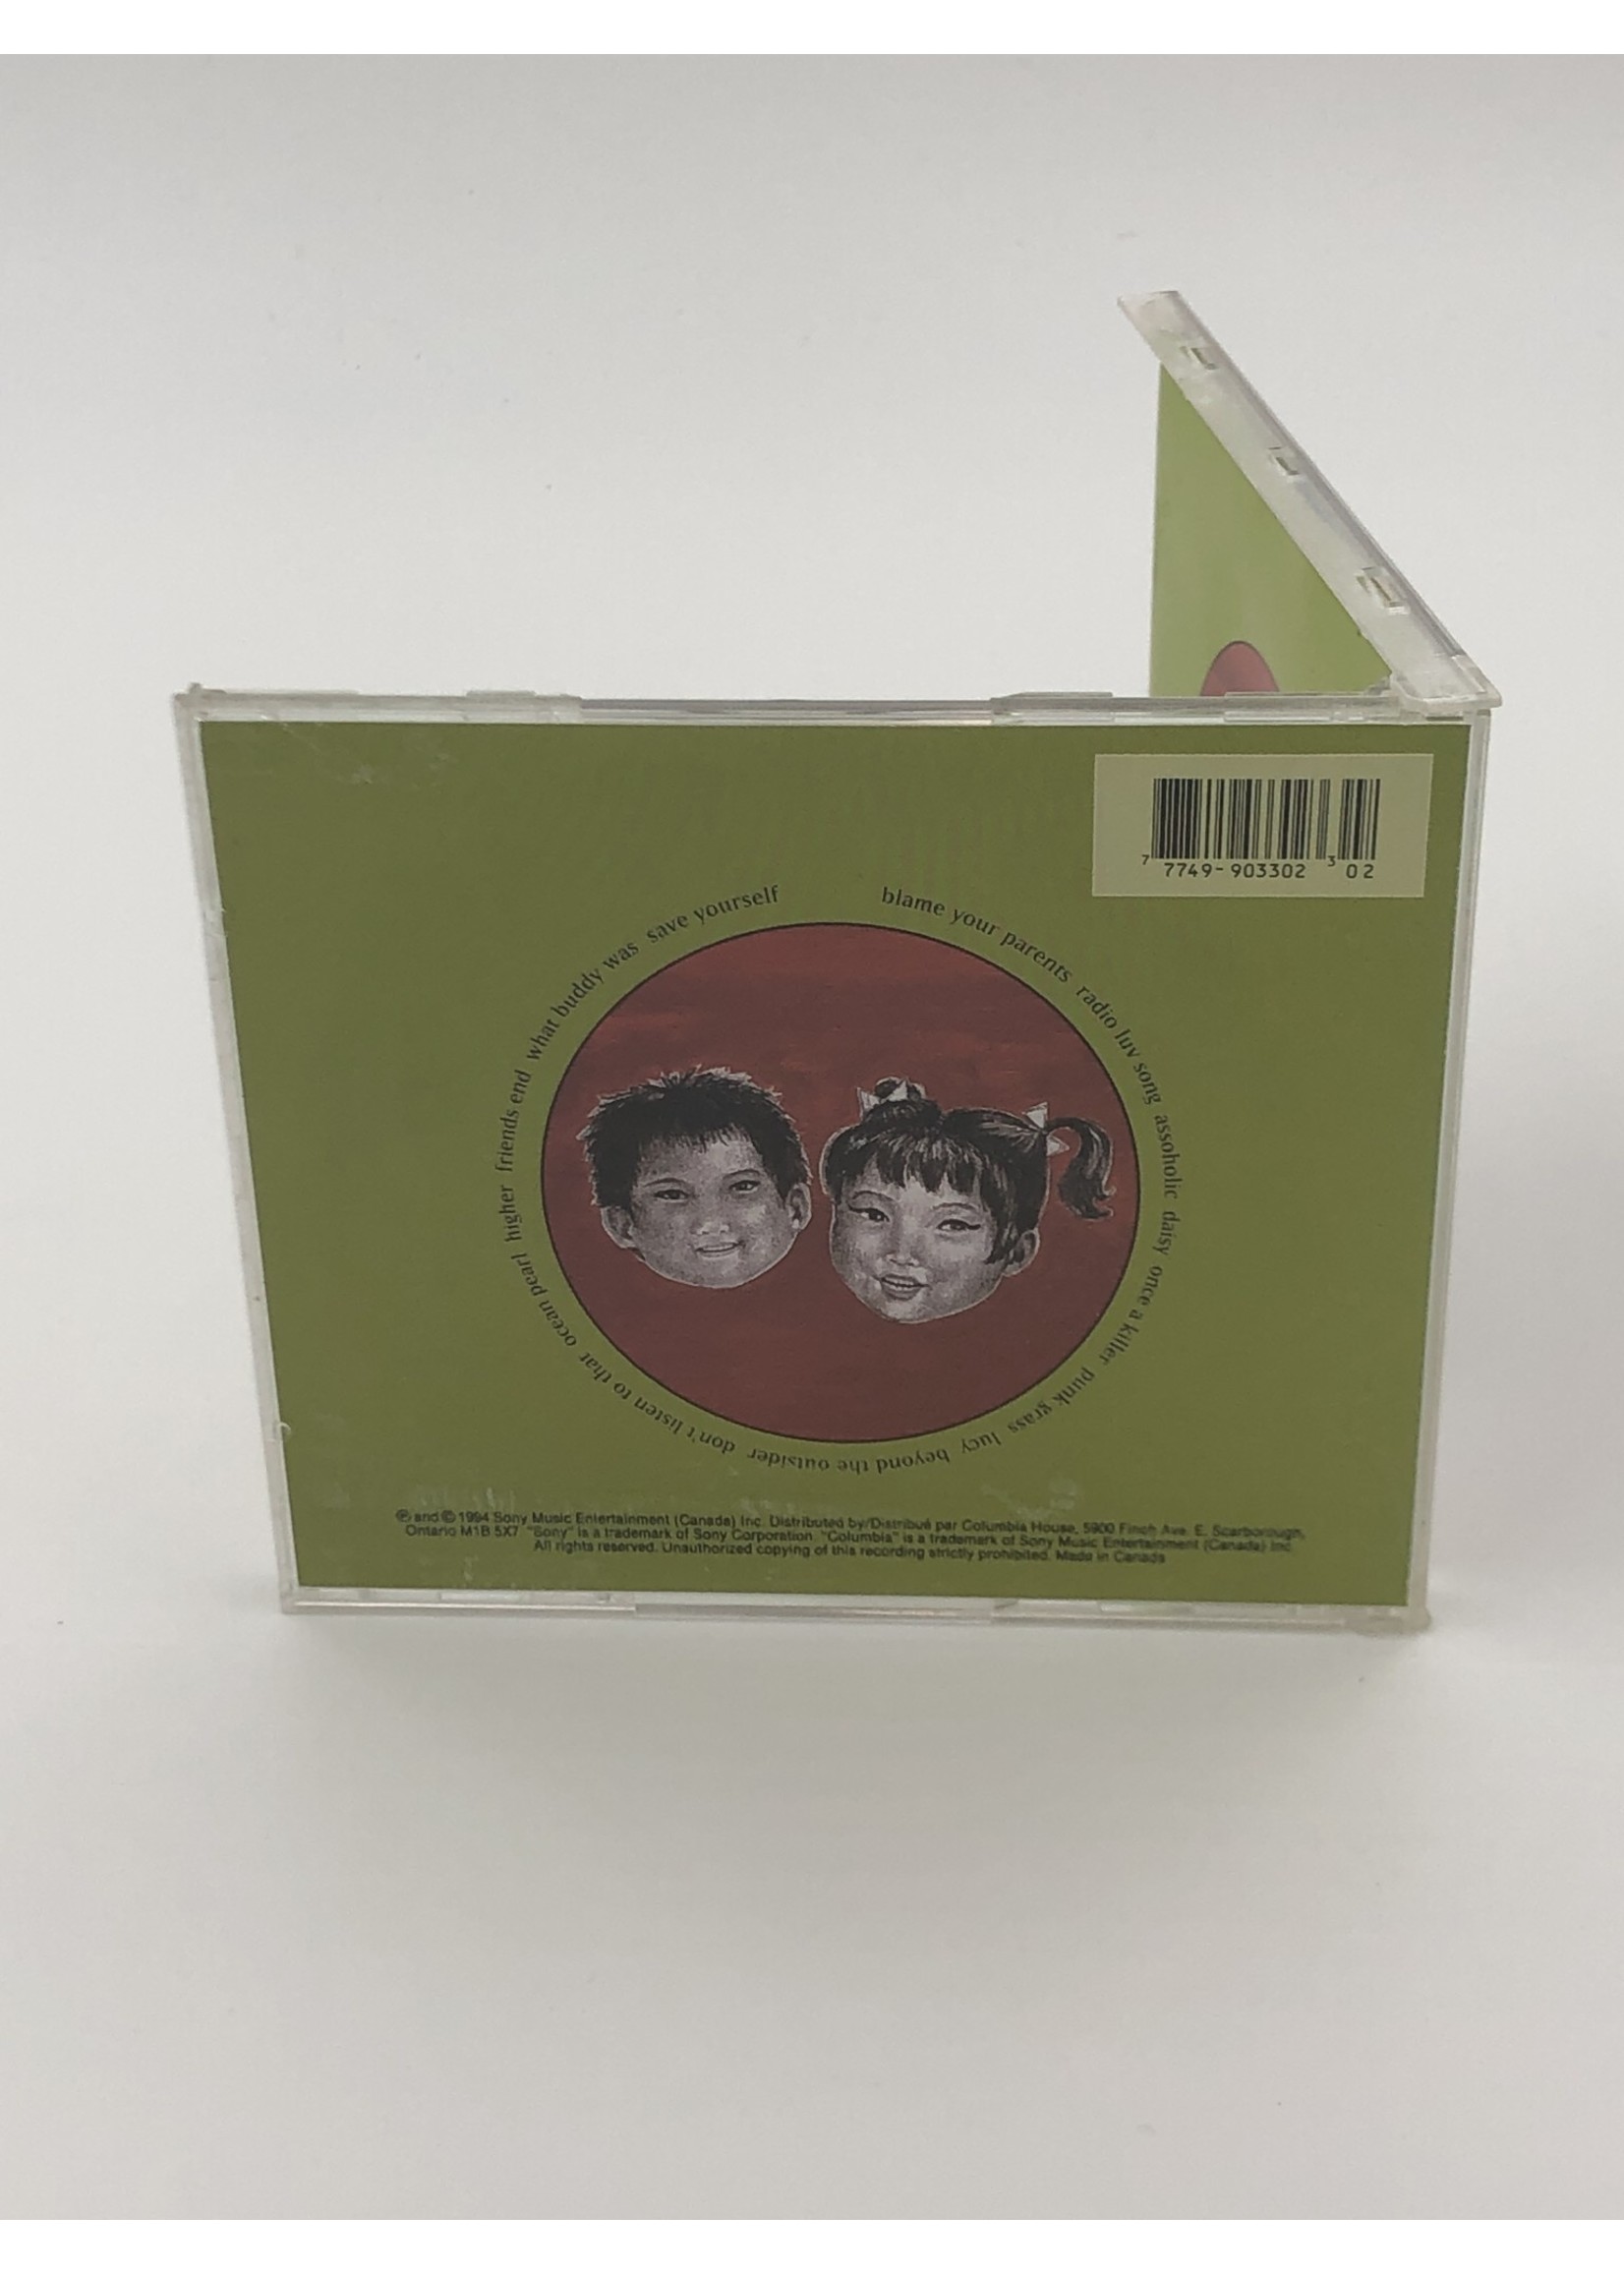 CD 54-40 Smilin Buddha Cabaret CD